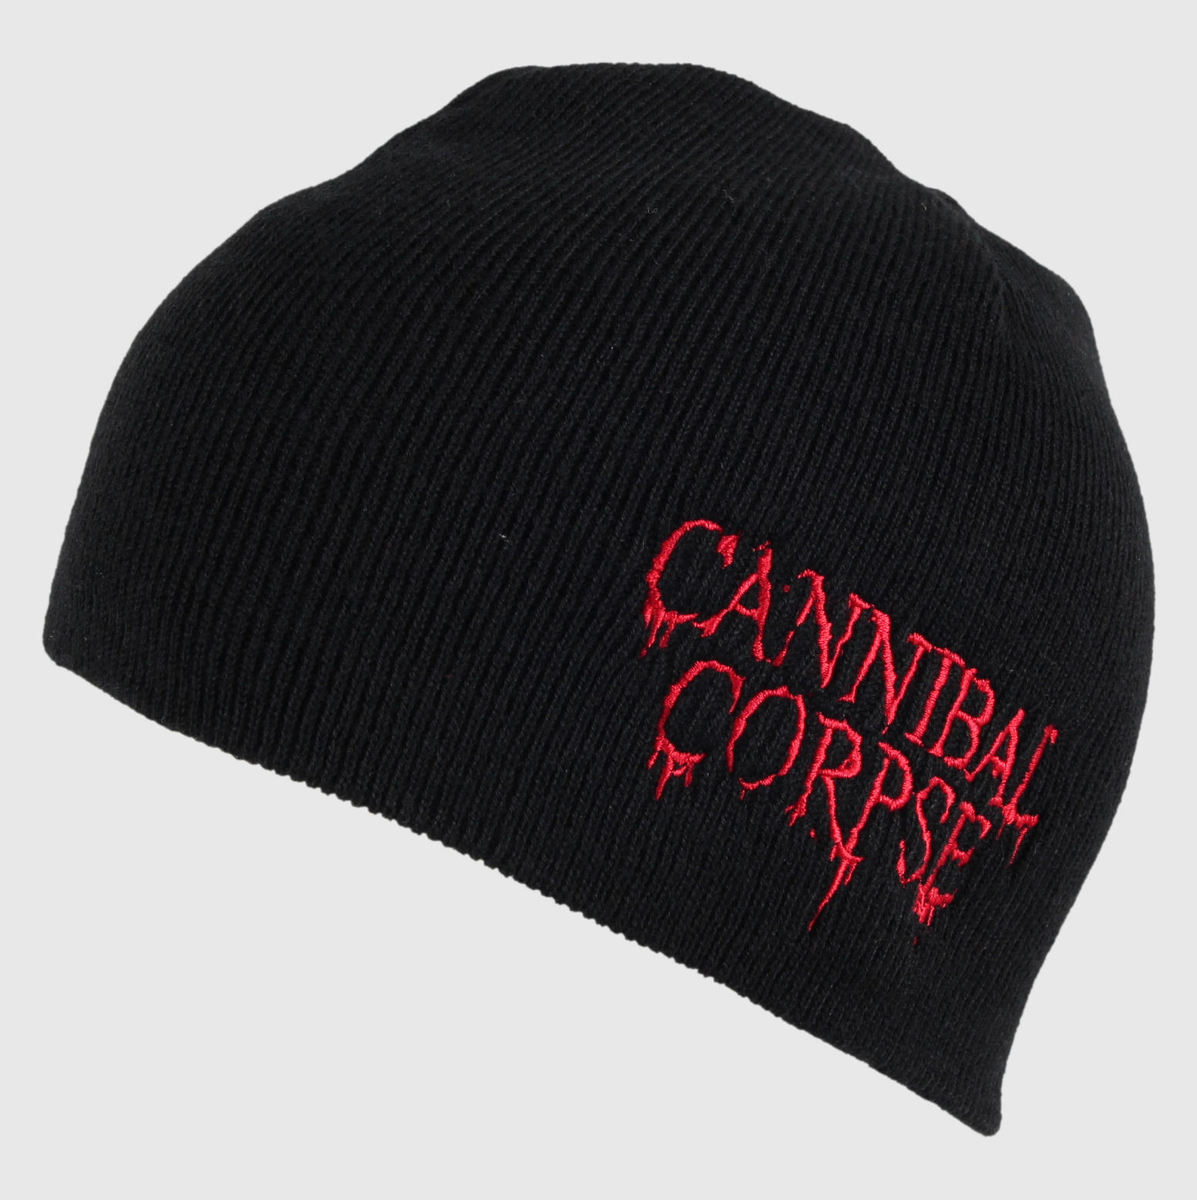 Cannibal Corpse - Logo